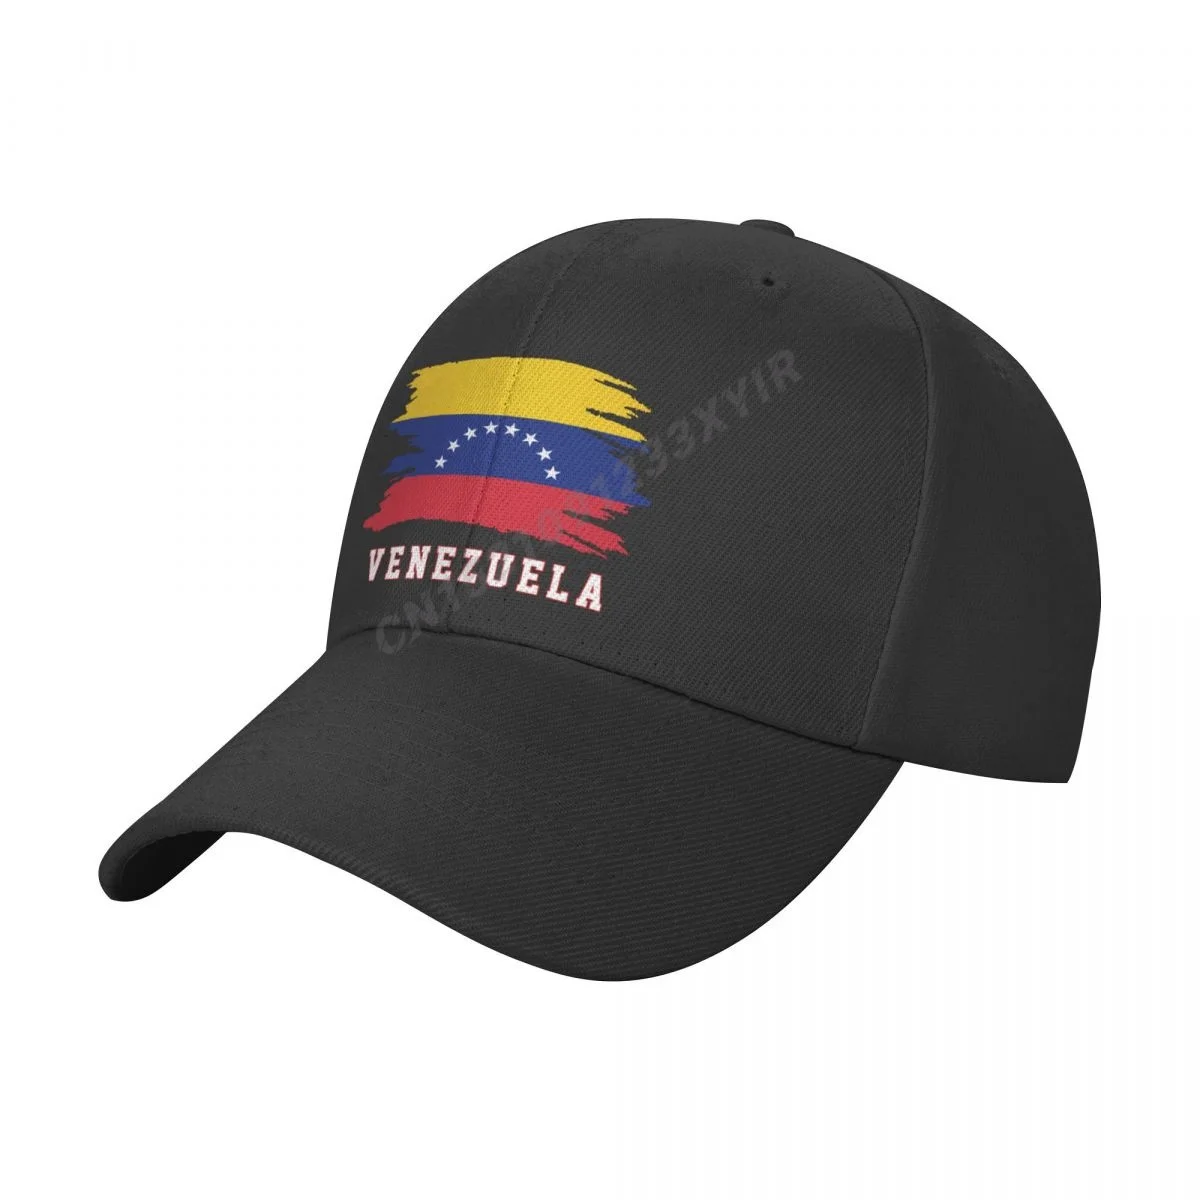 Baseball Cap Venezuela Flag Cool Venezuelians Fans Wild Sun Shade Peaked Adjustable Outdoor Caps for Men Women